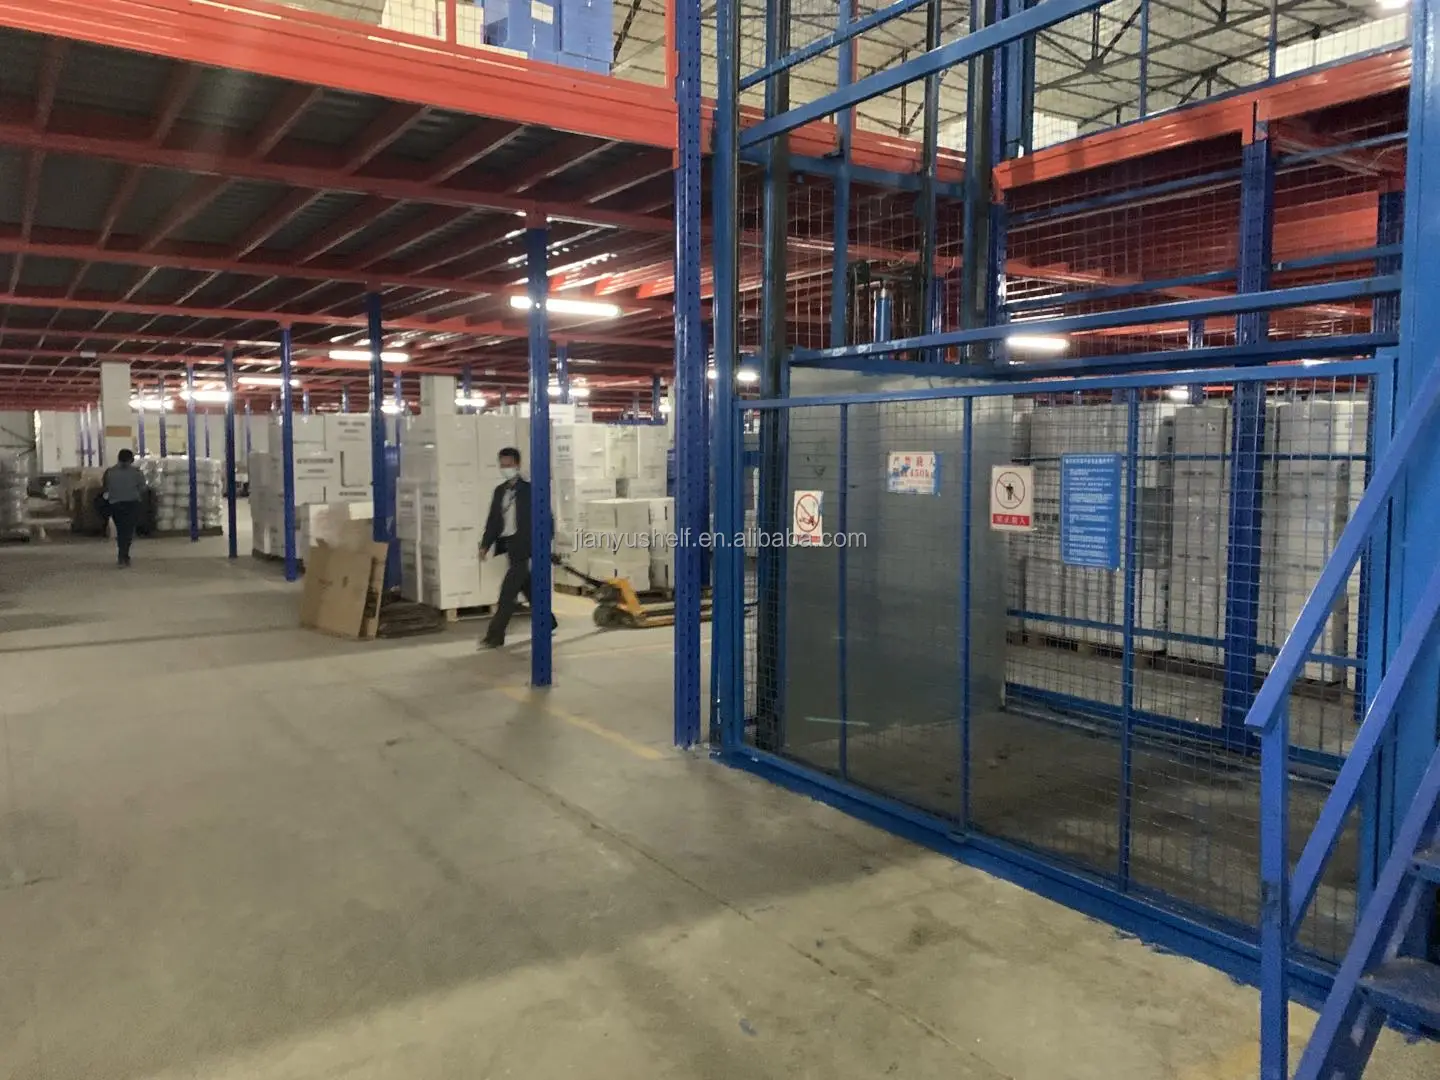 Assemble warehouse mezzanines platform heavy duty industrial storage racking system platform high quality warehouse storage rack factory